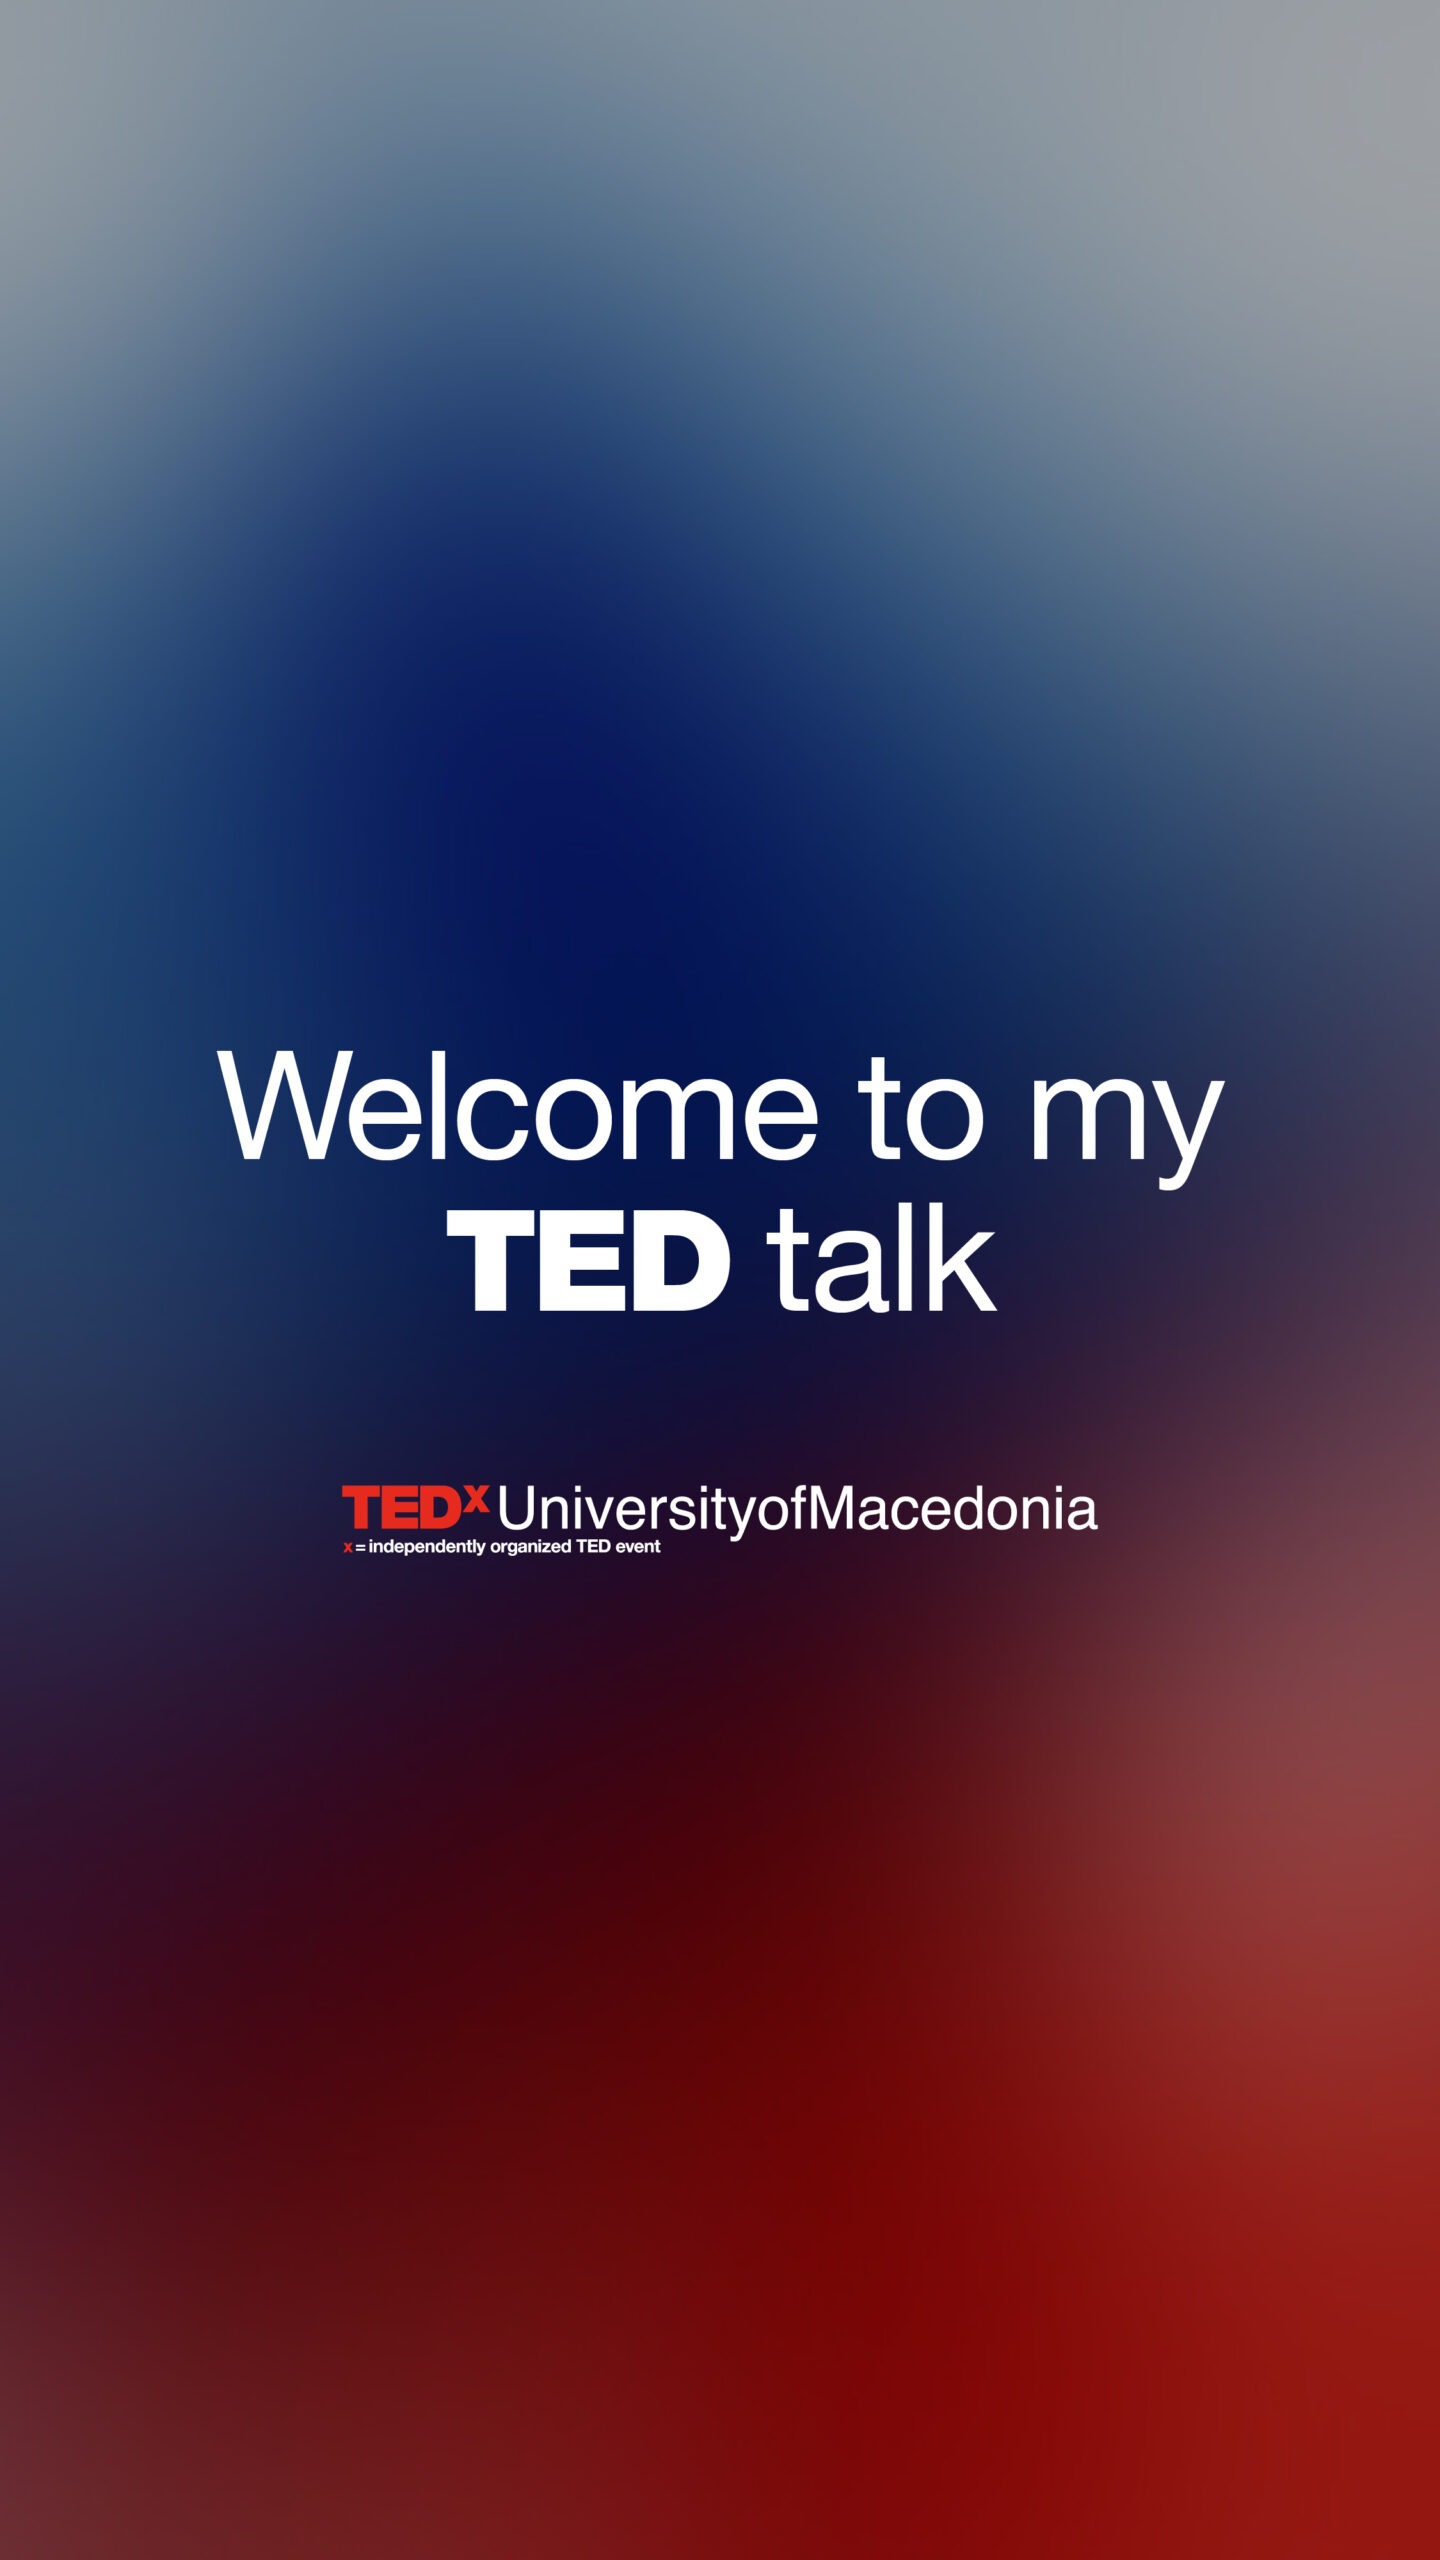 TEDxUniversityofMacedonia - Welcome to my TED Talk